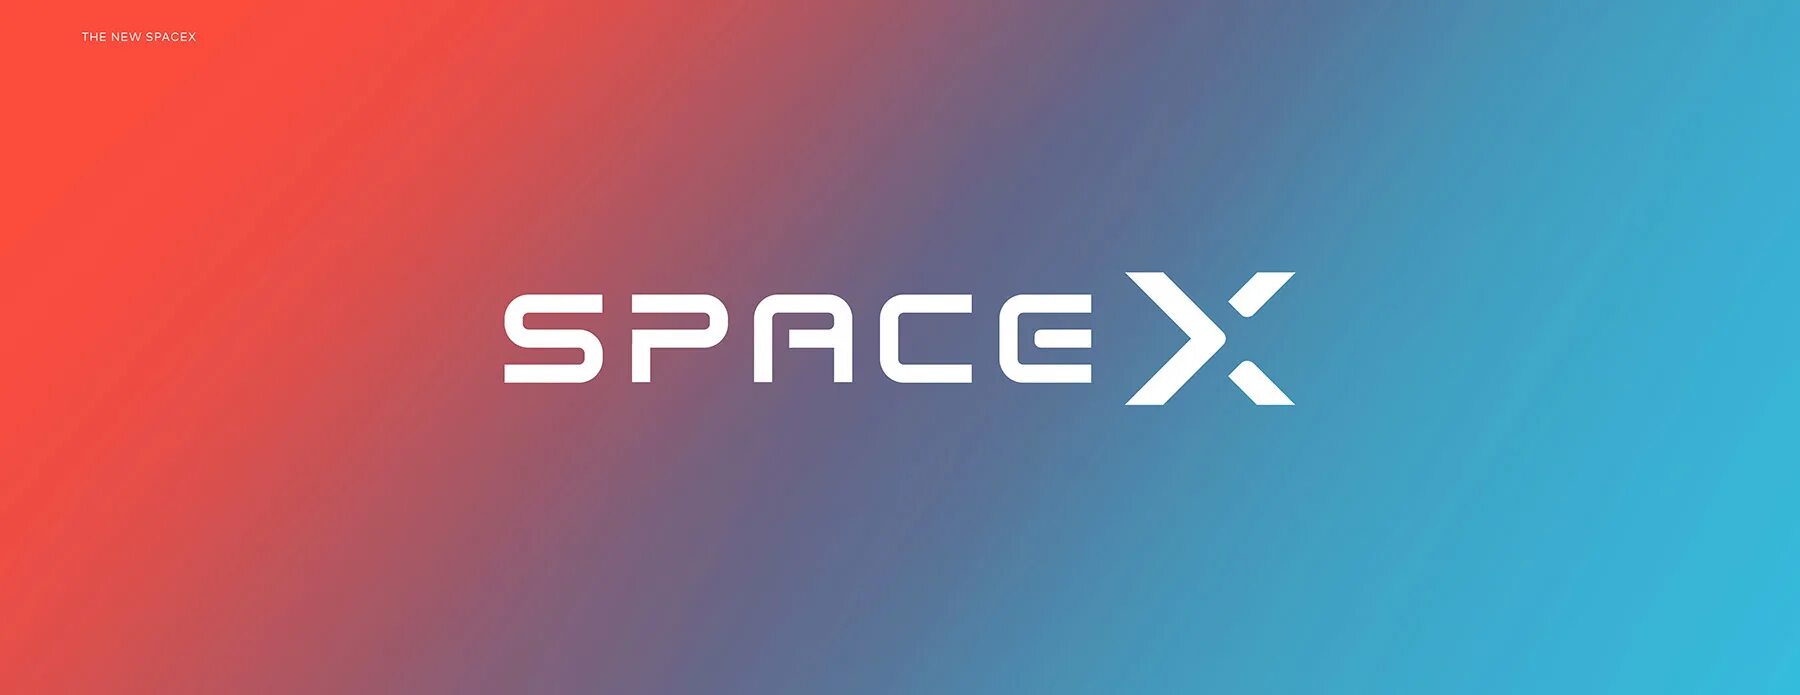 Спейс х лого. Space x лого. SPACEX ава. SPACEX надпись. Спасис обмена